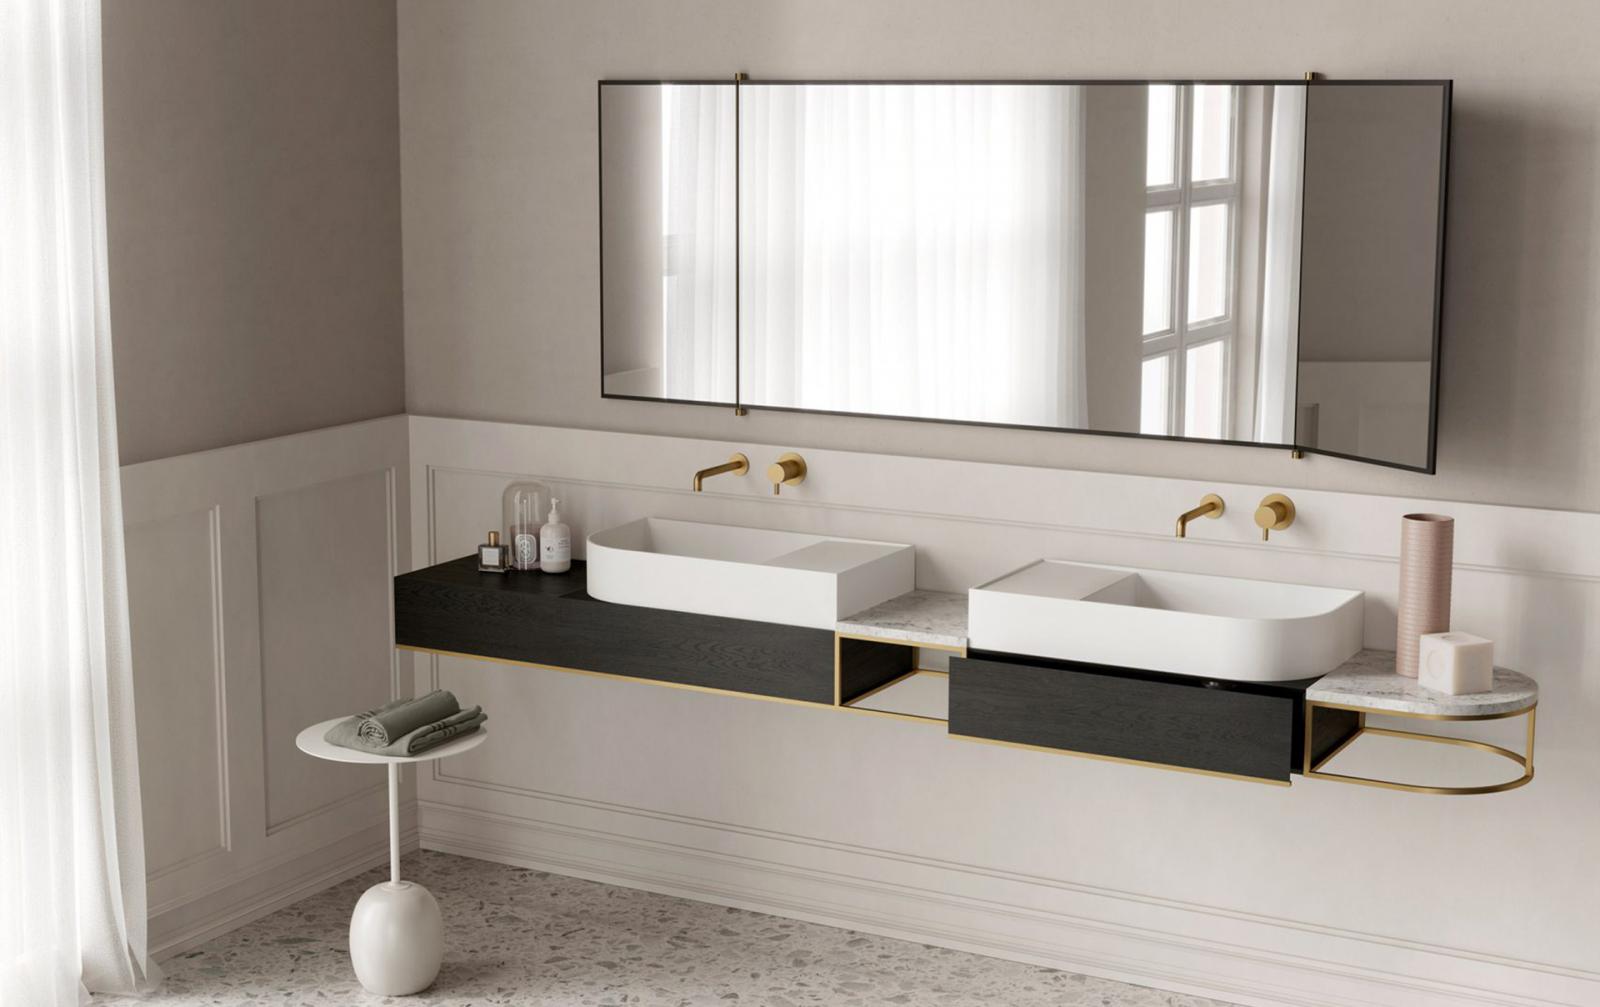 Ванная комната 2019: коллекция Bernhardt & Vella для Ex.t